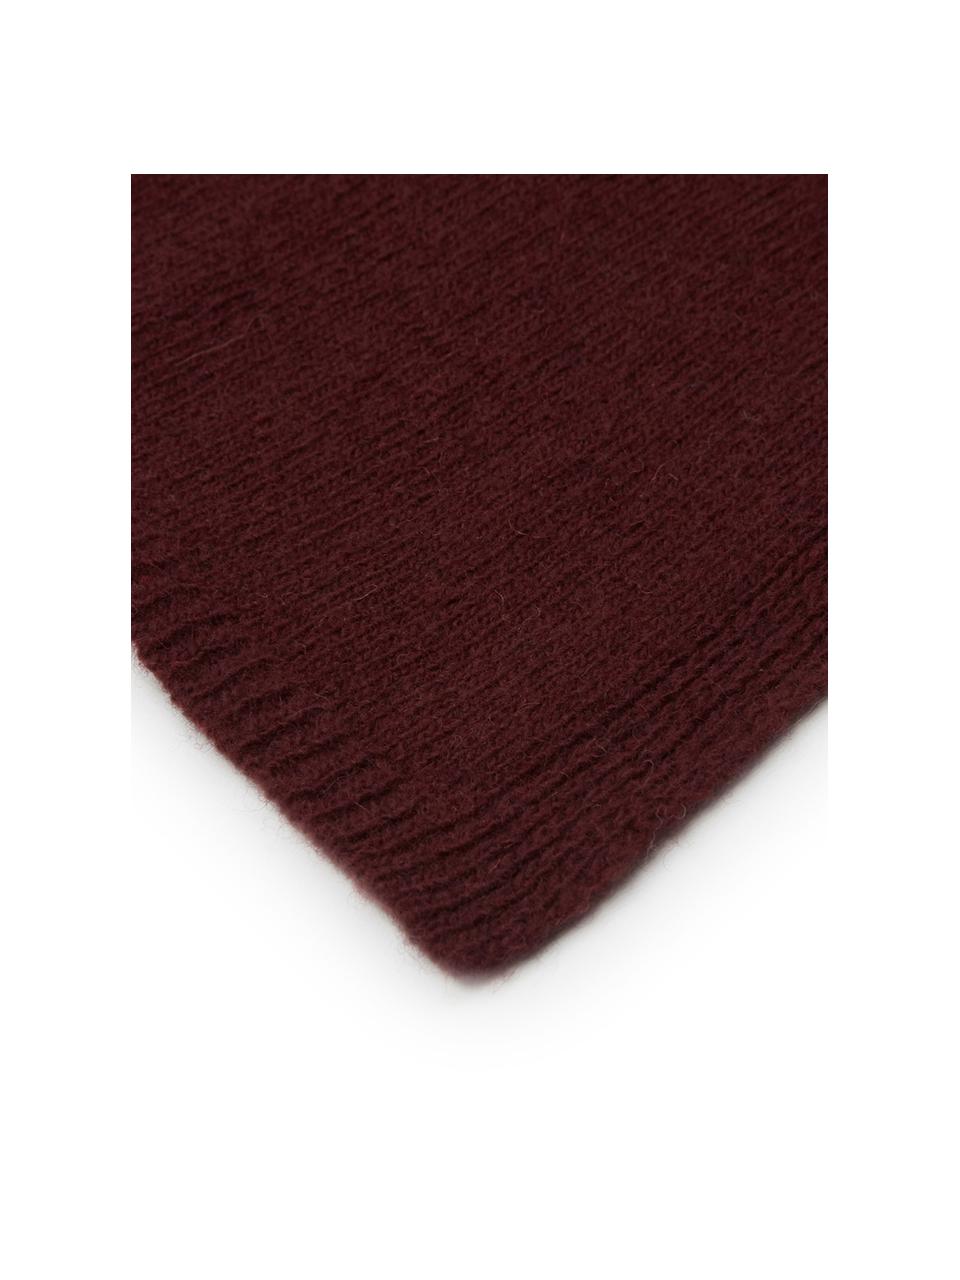 Manta de punto finamente tejida Fishbone, 80% lana, 20% poliamida, Color vino, An 130 x L 180 cm